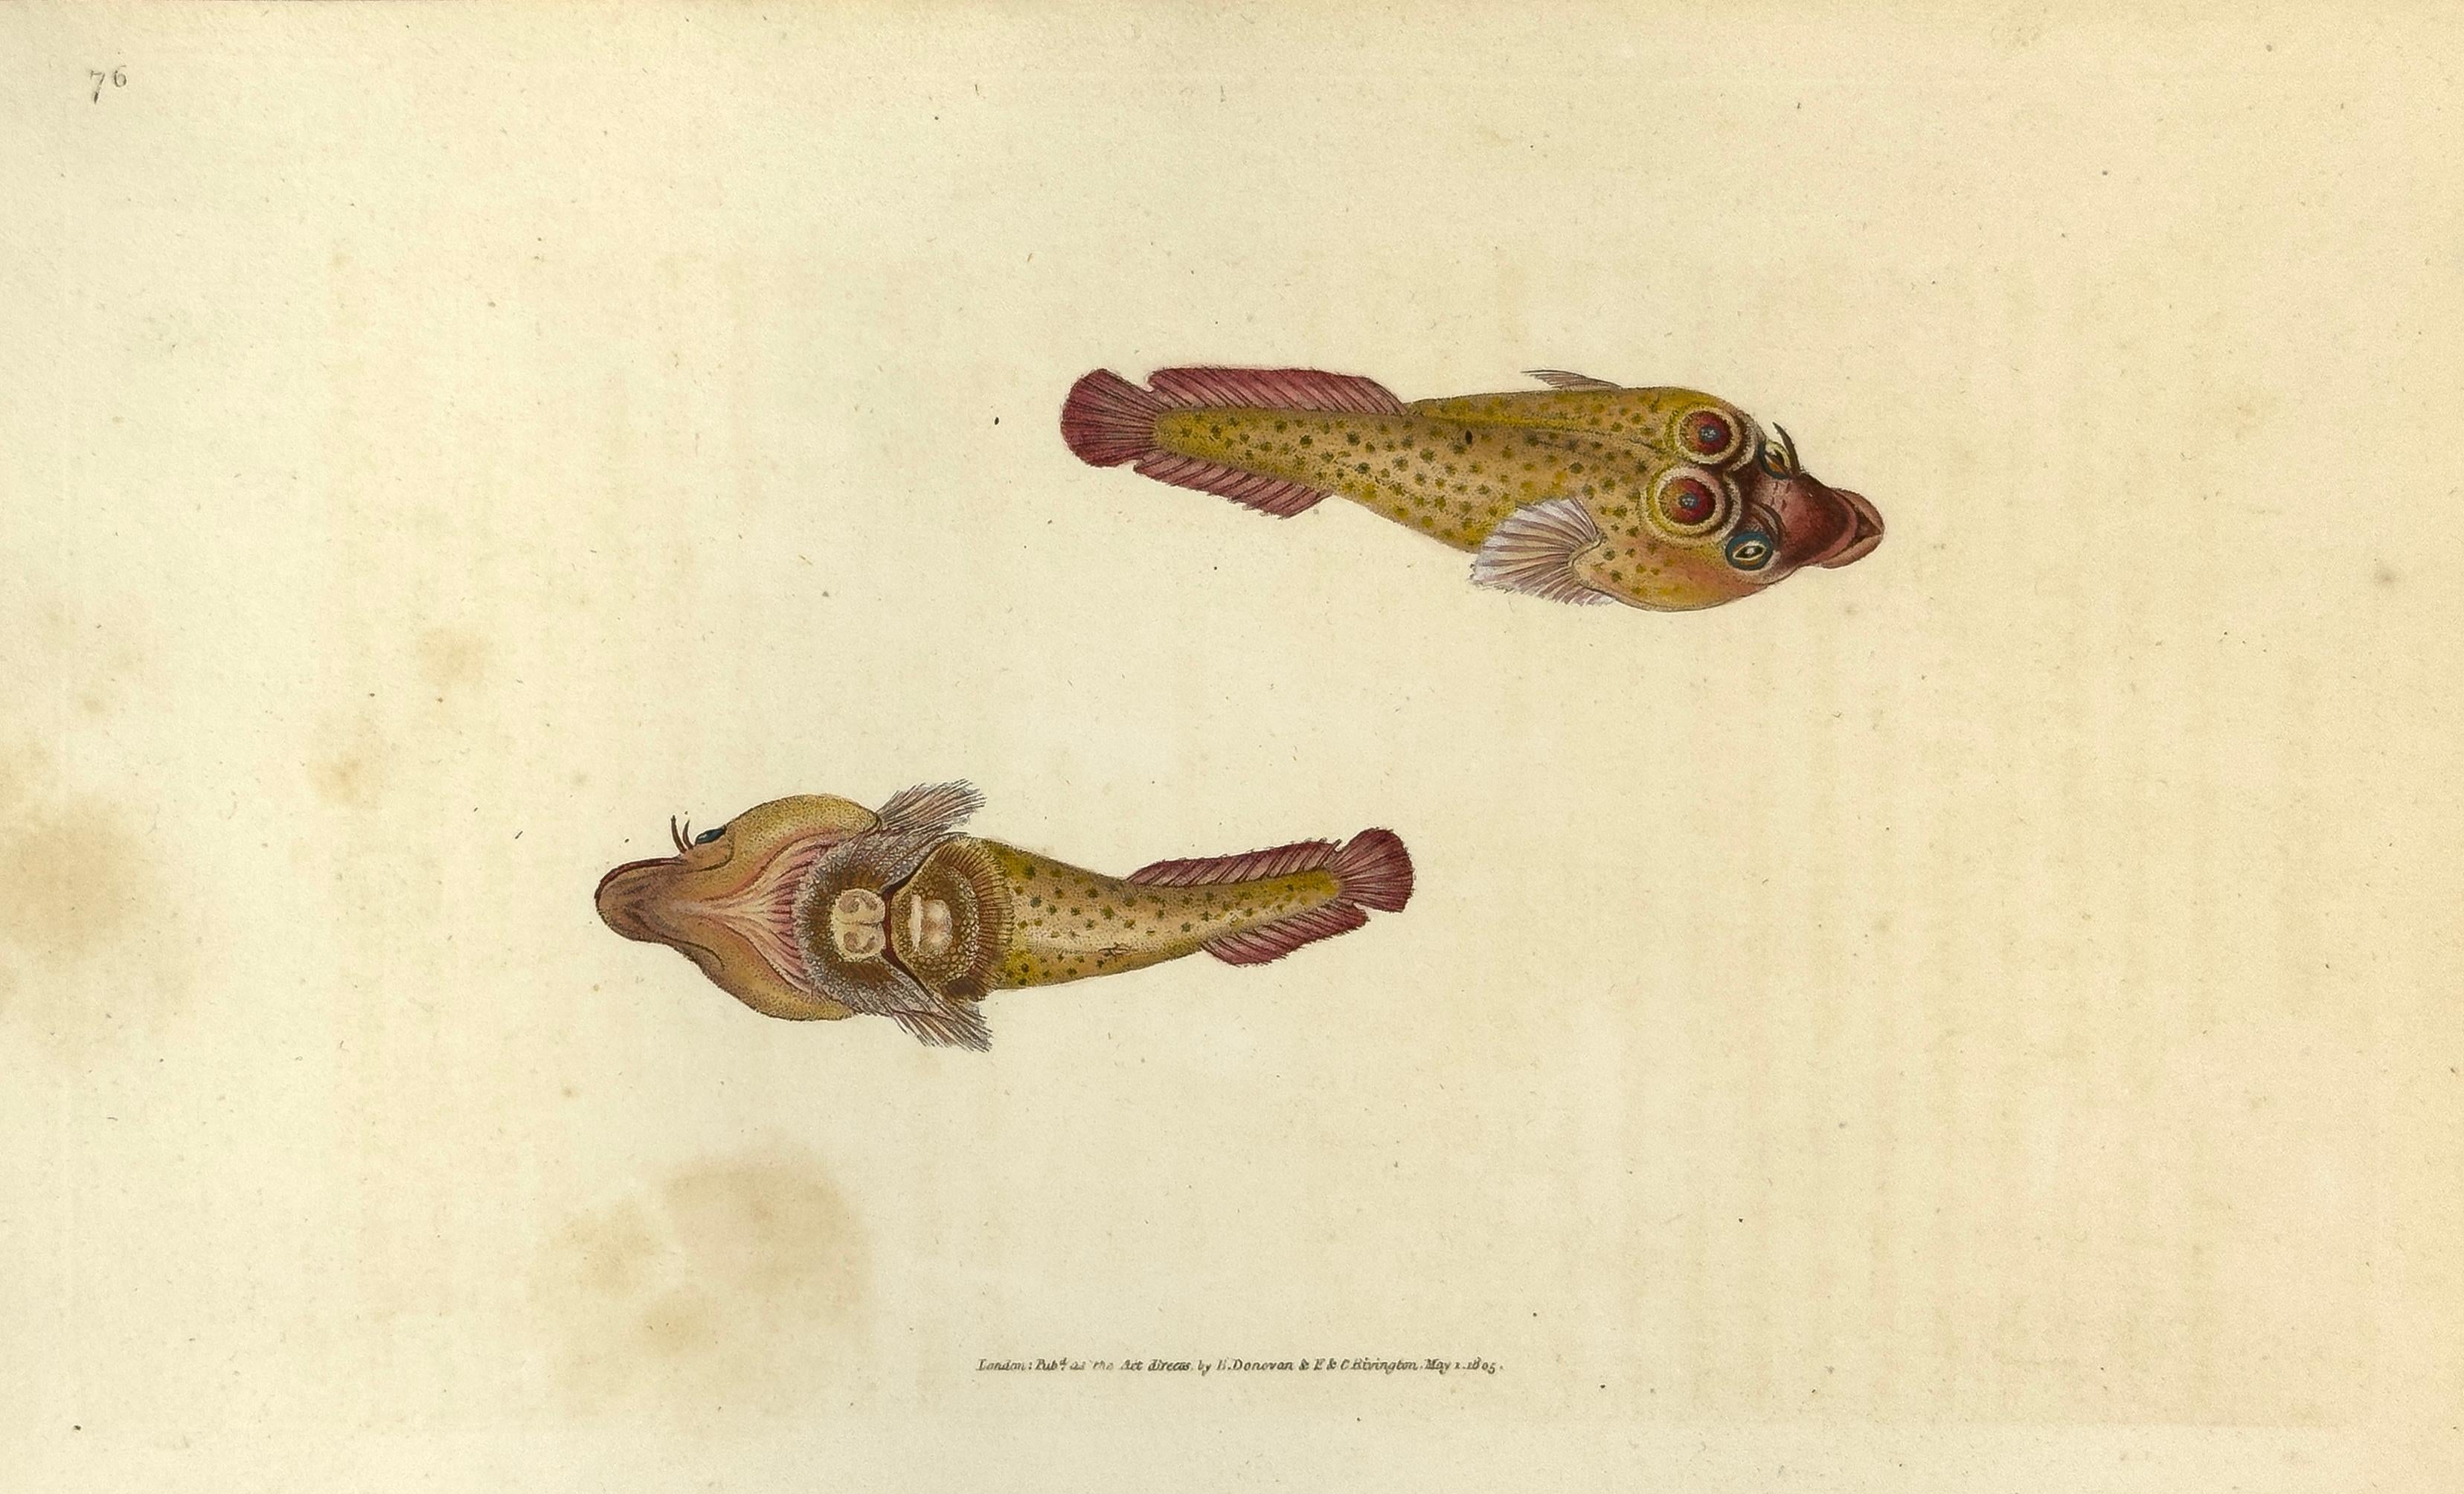 Edward Donovan Animal Print - 76: Cyclopterus ocellatus, Ocellated Sucker